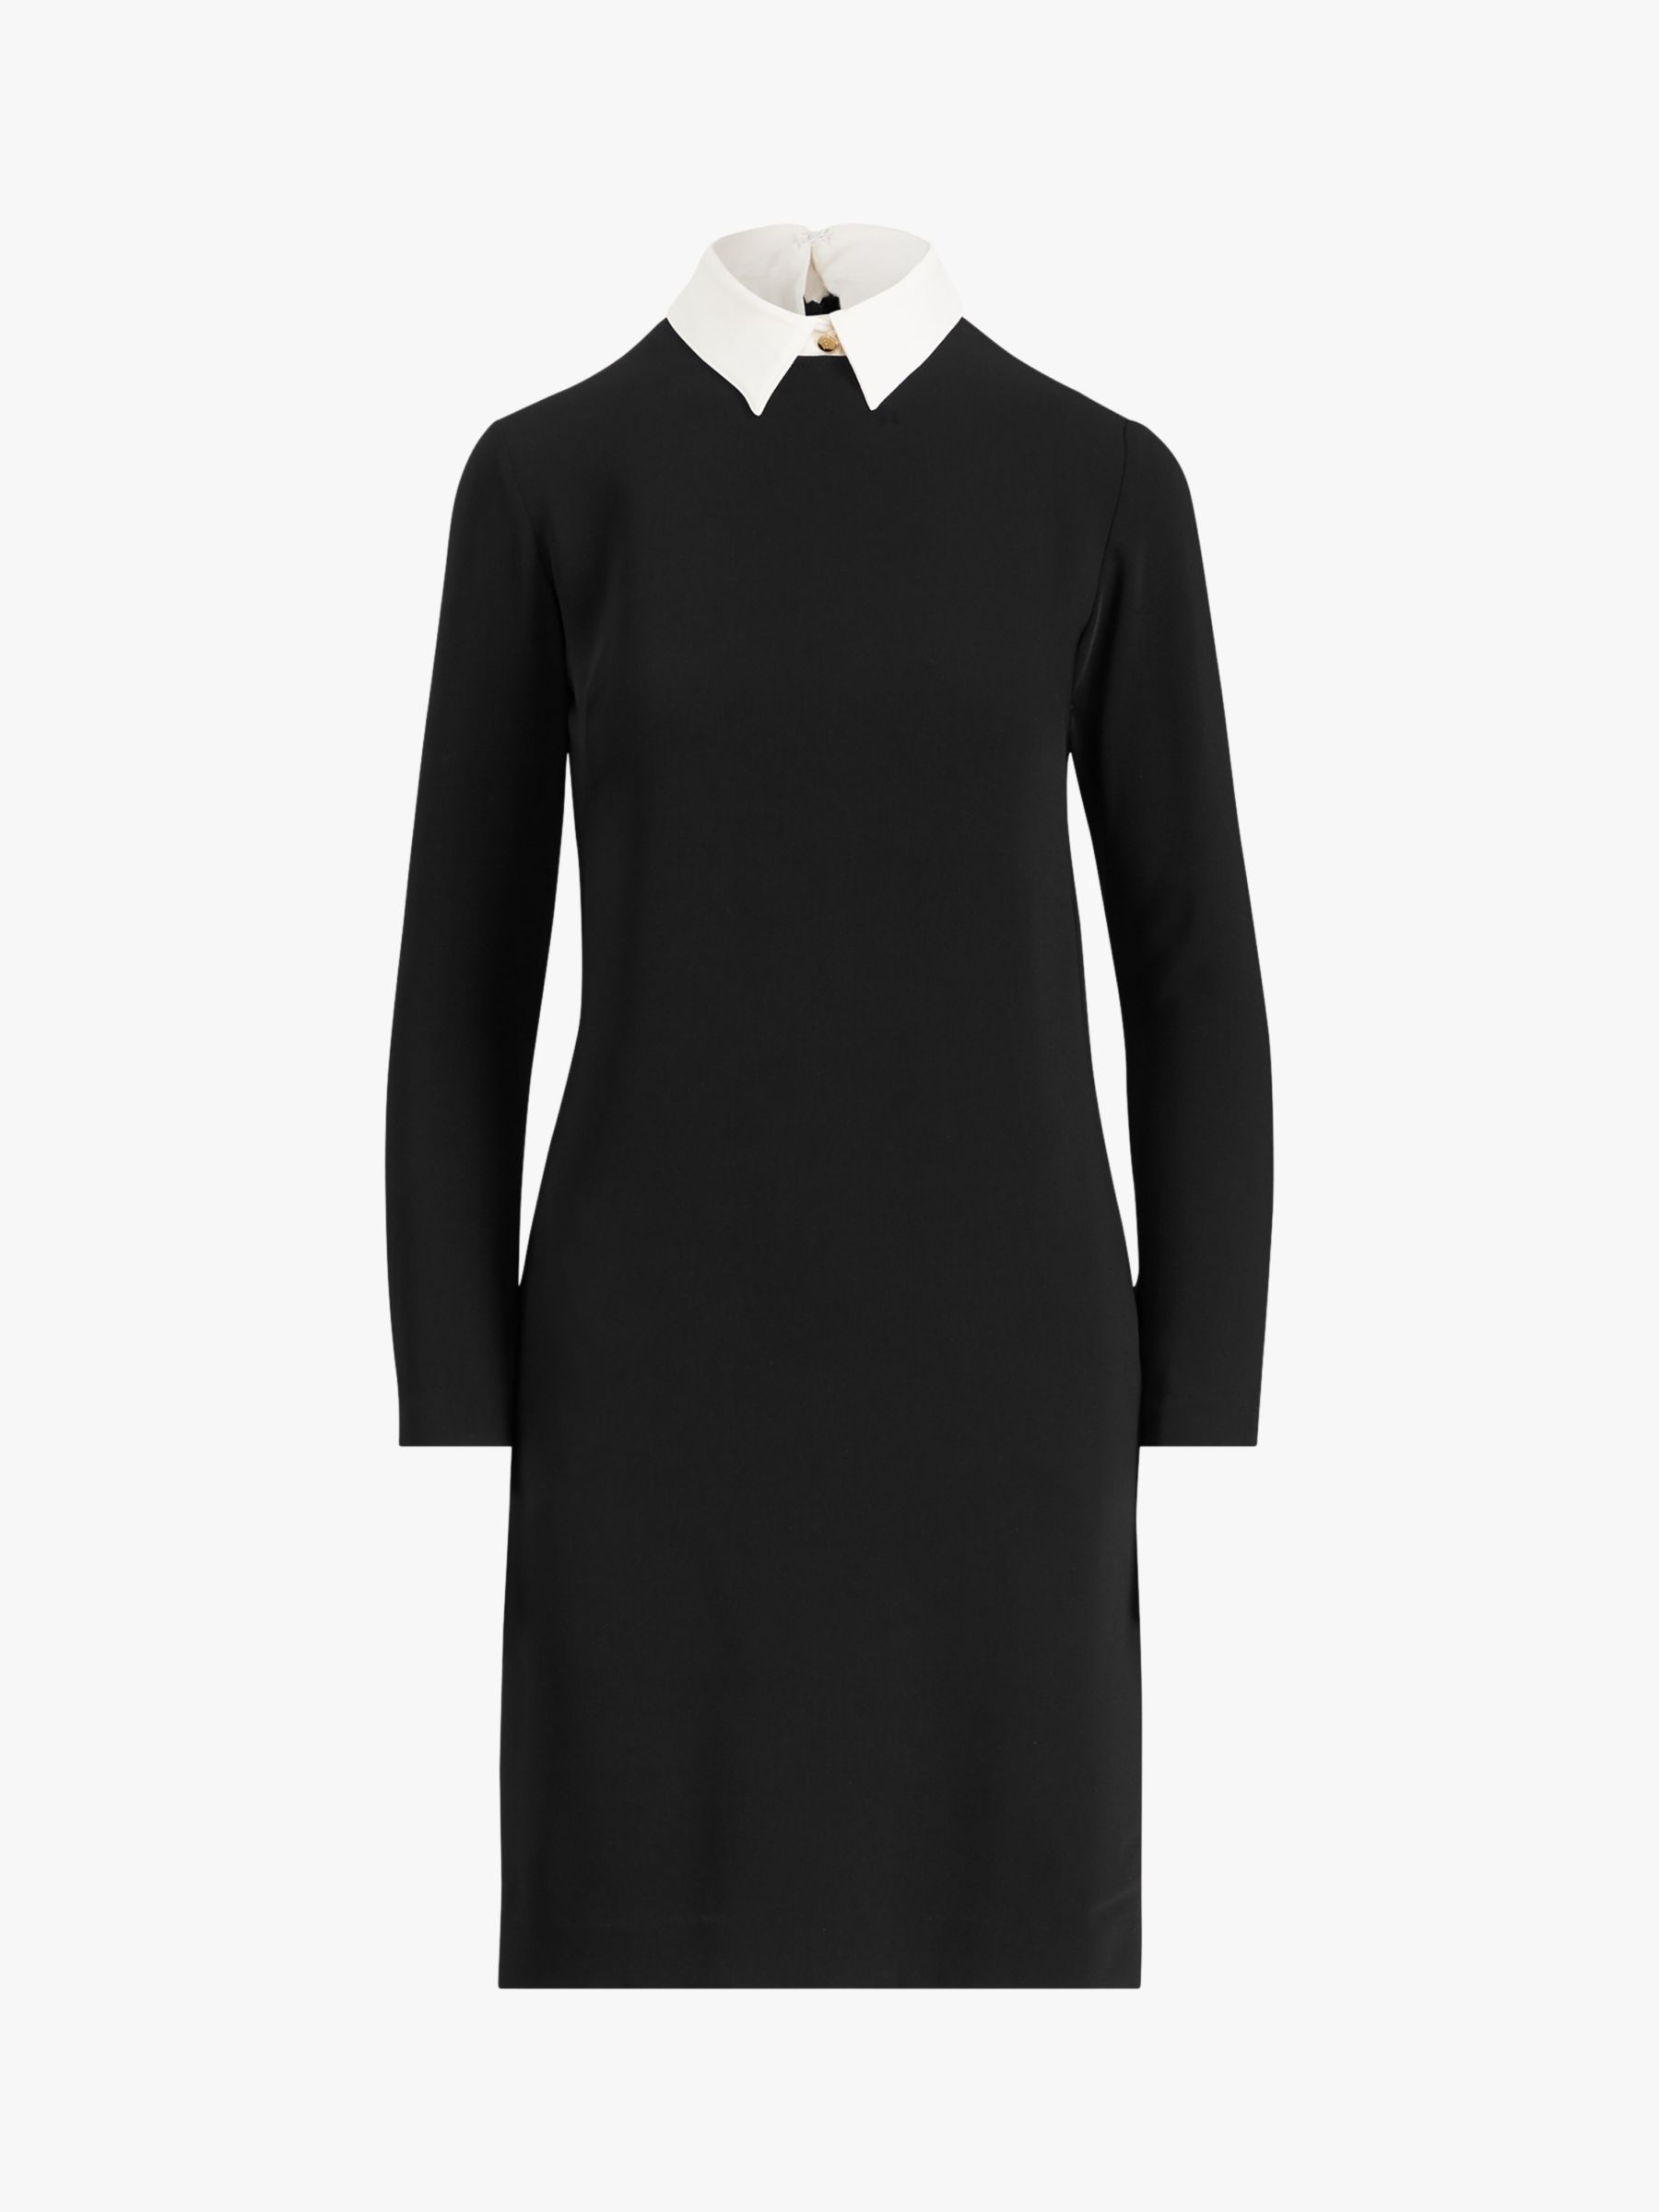 ralph lauren black dress with white collar and cuffs